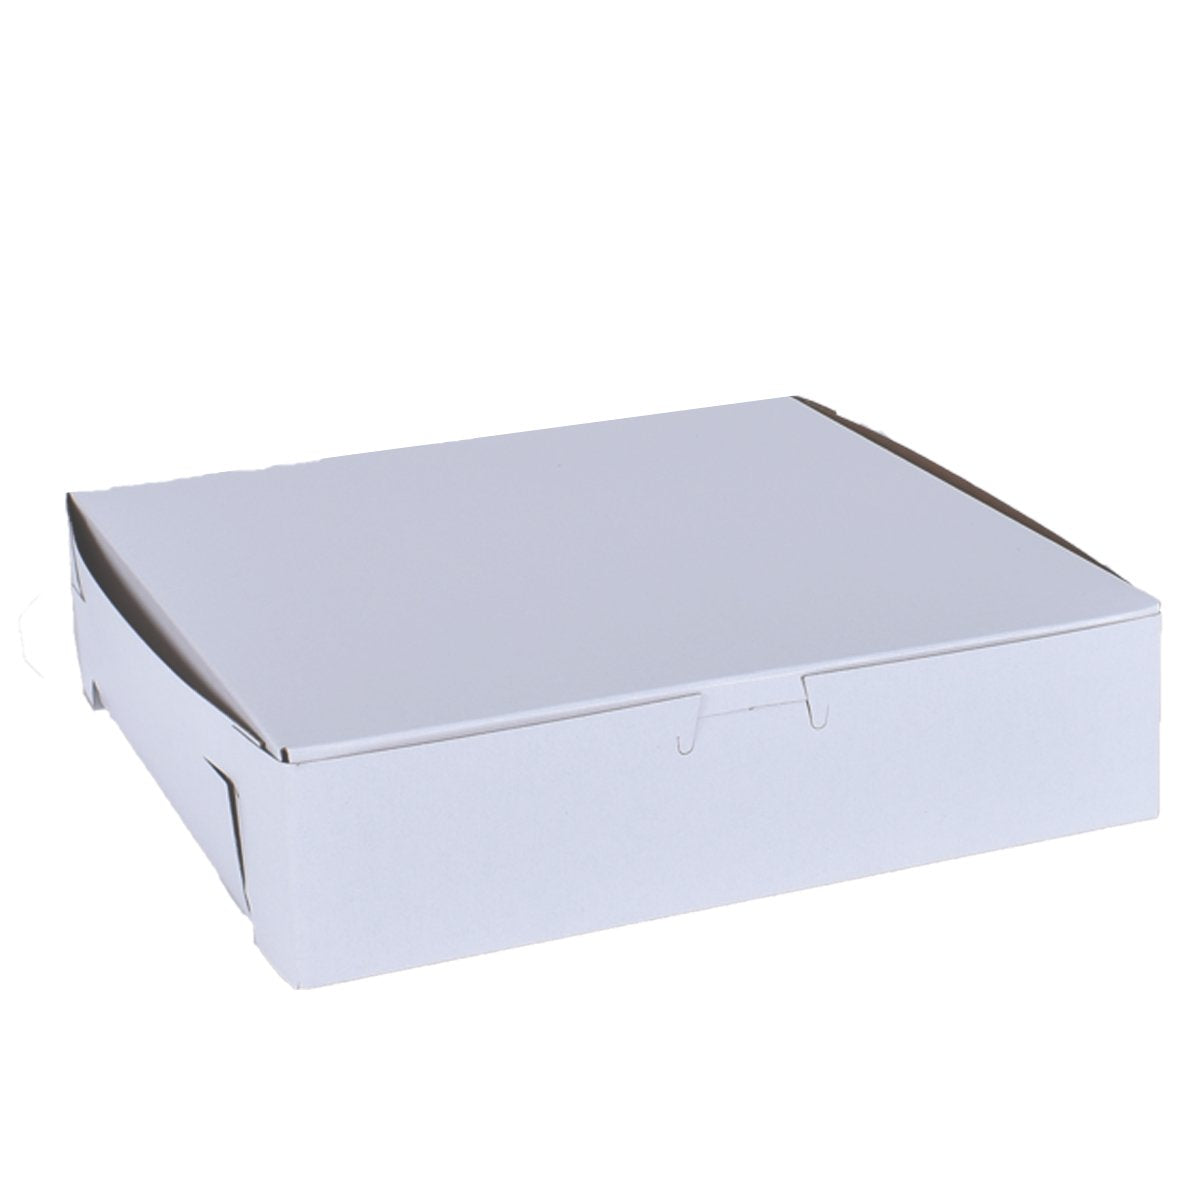 White Cake Boxes - 9x9x2.5 Bake Supply Plus Box - Bake Supply Plus